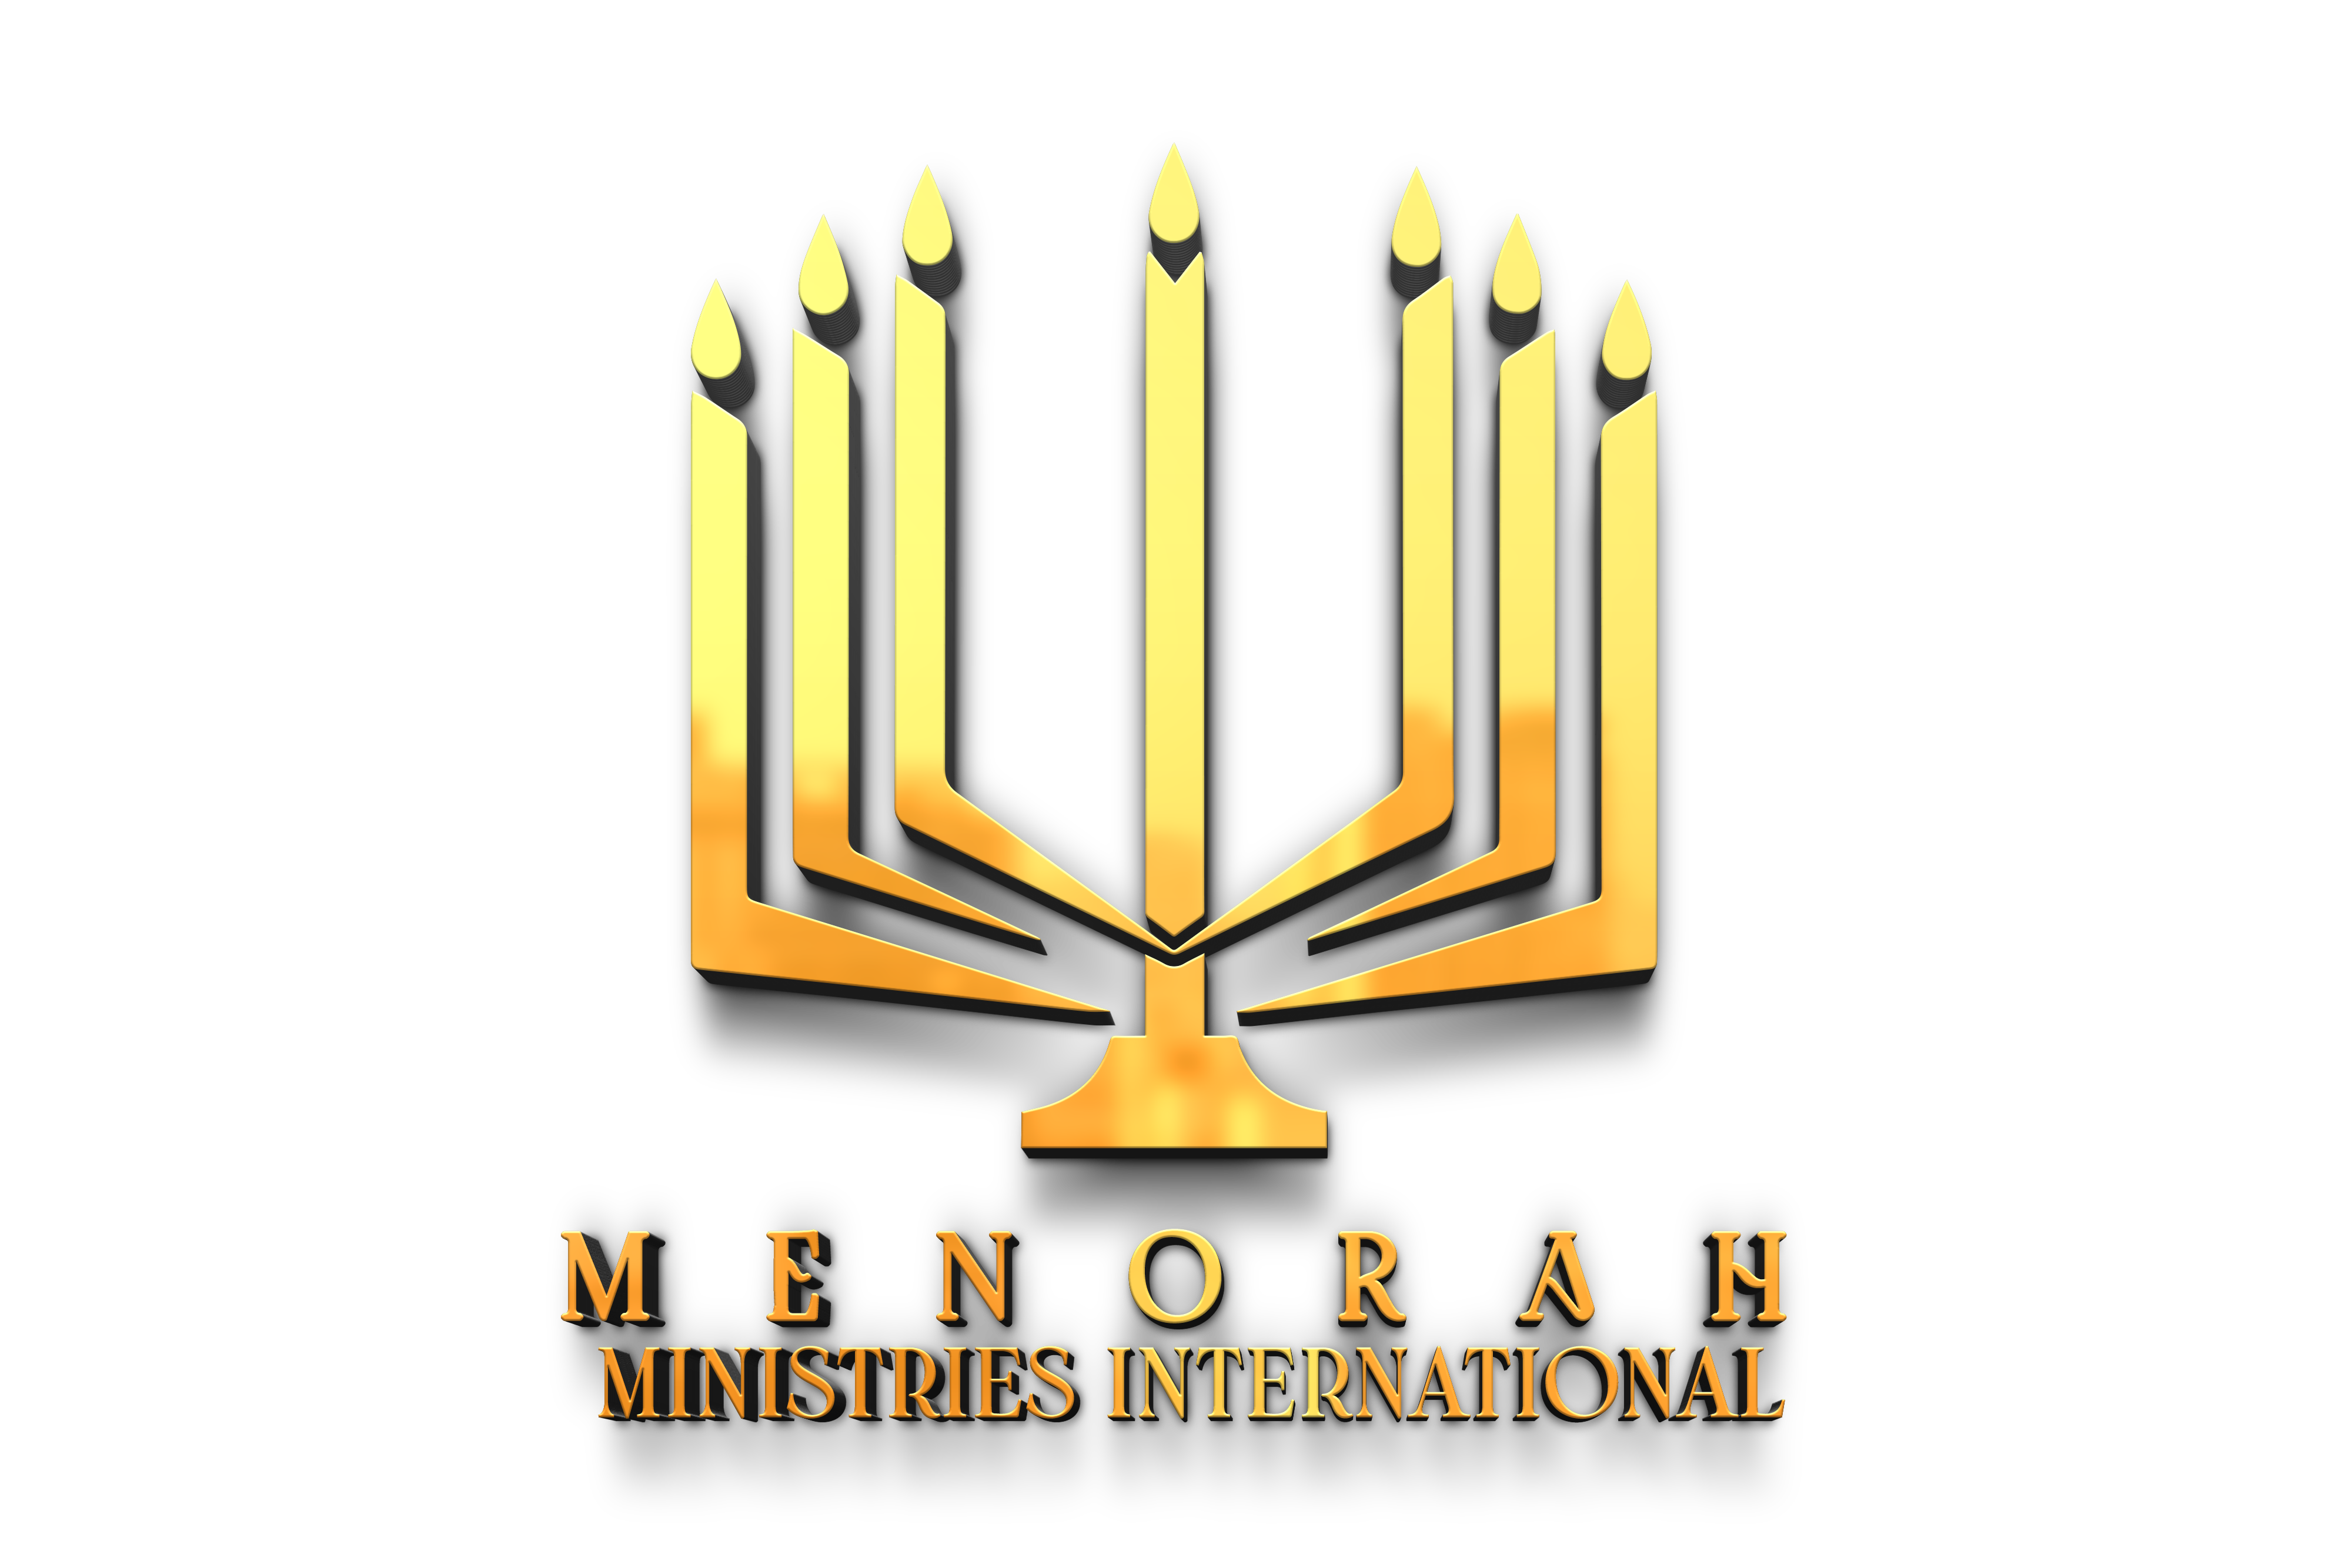 Menorah Ministries International